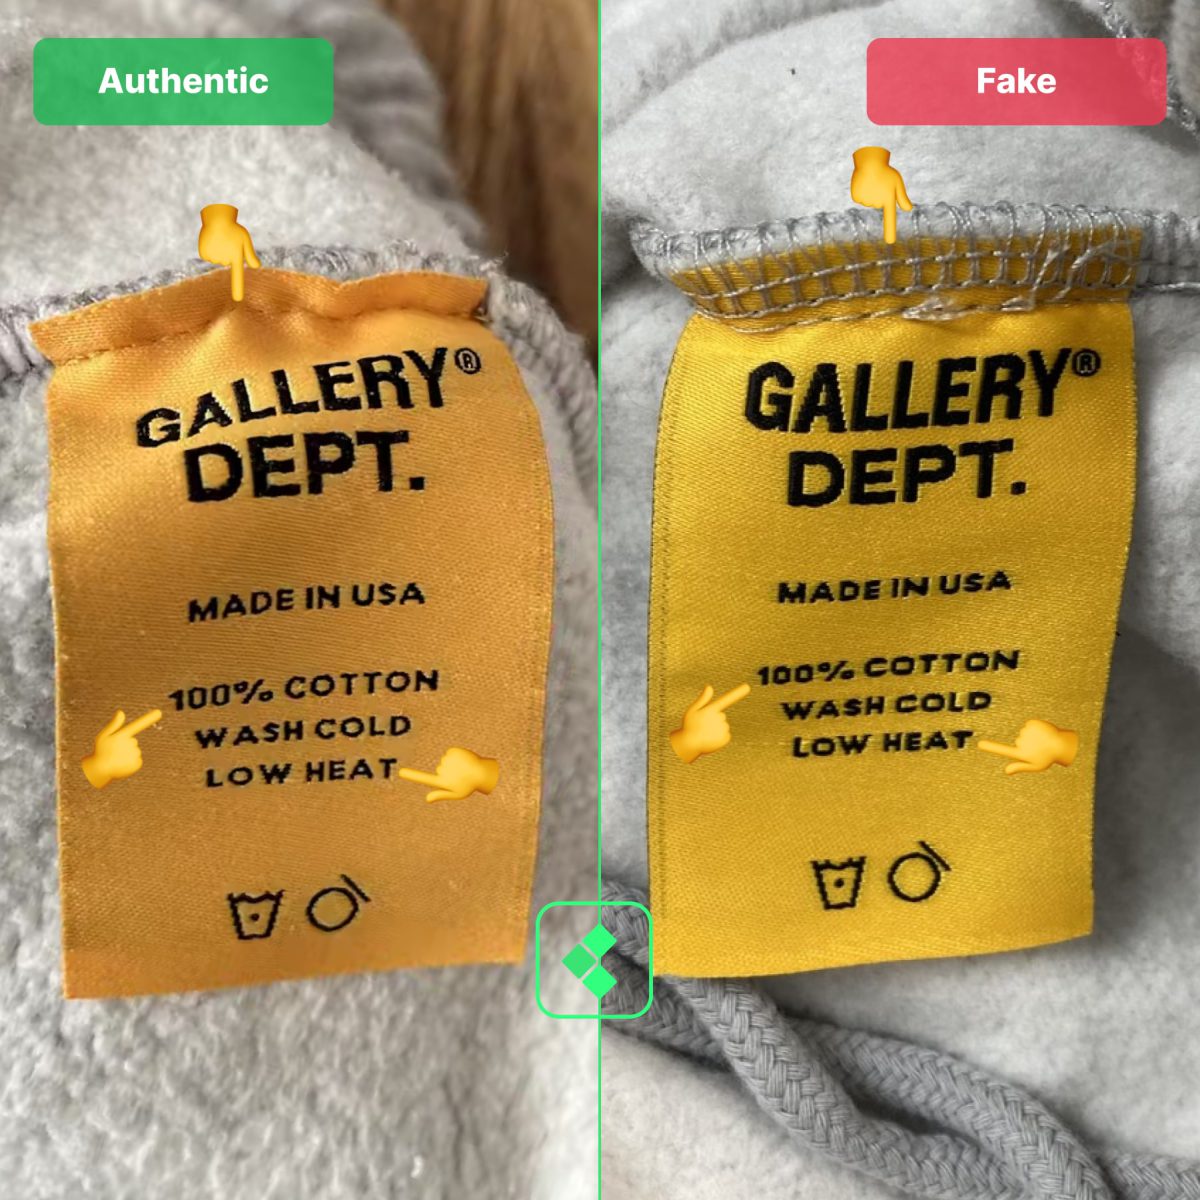 Gallery Dept Wash Tag Comparison - Real Vs Fake